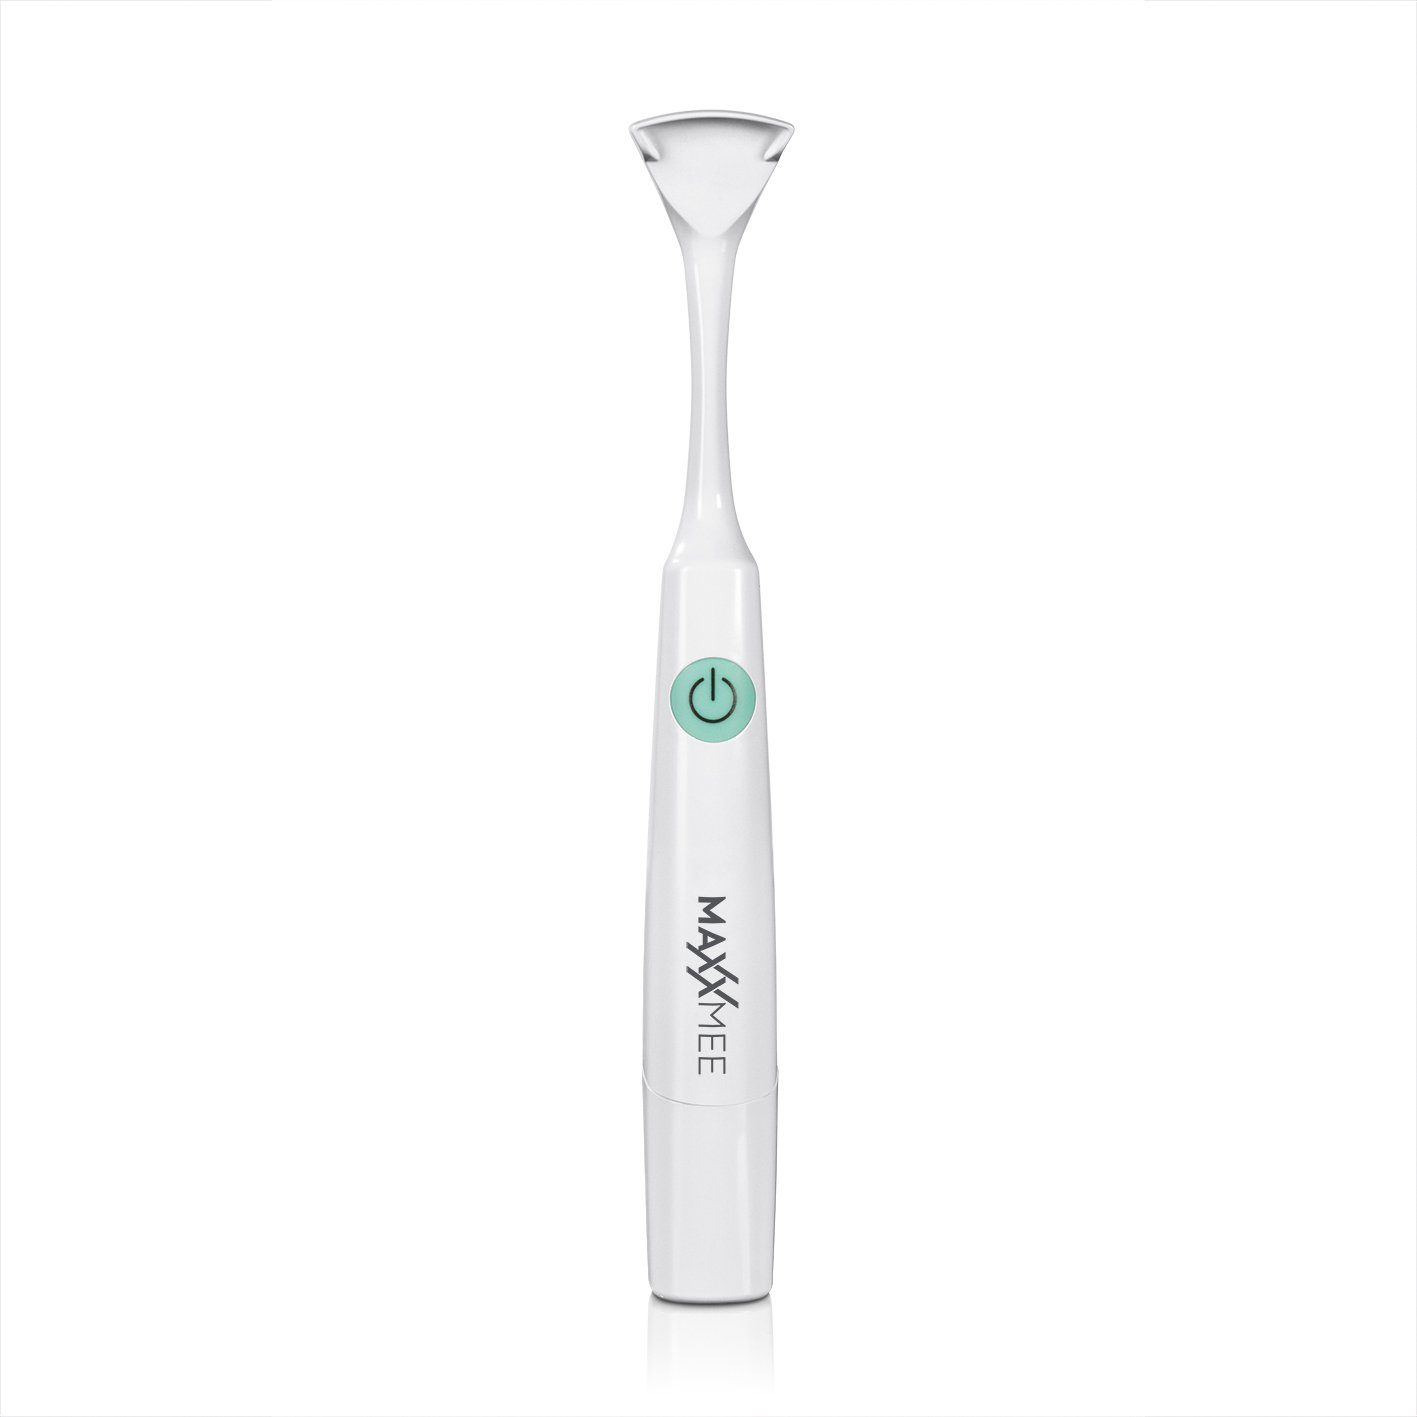 MAXXMEE Zahnpflege-Set, Zungenreiniger Dual Frequency weiß/mint